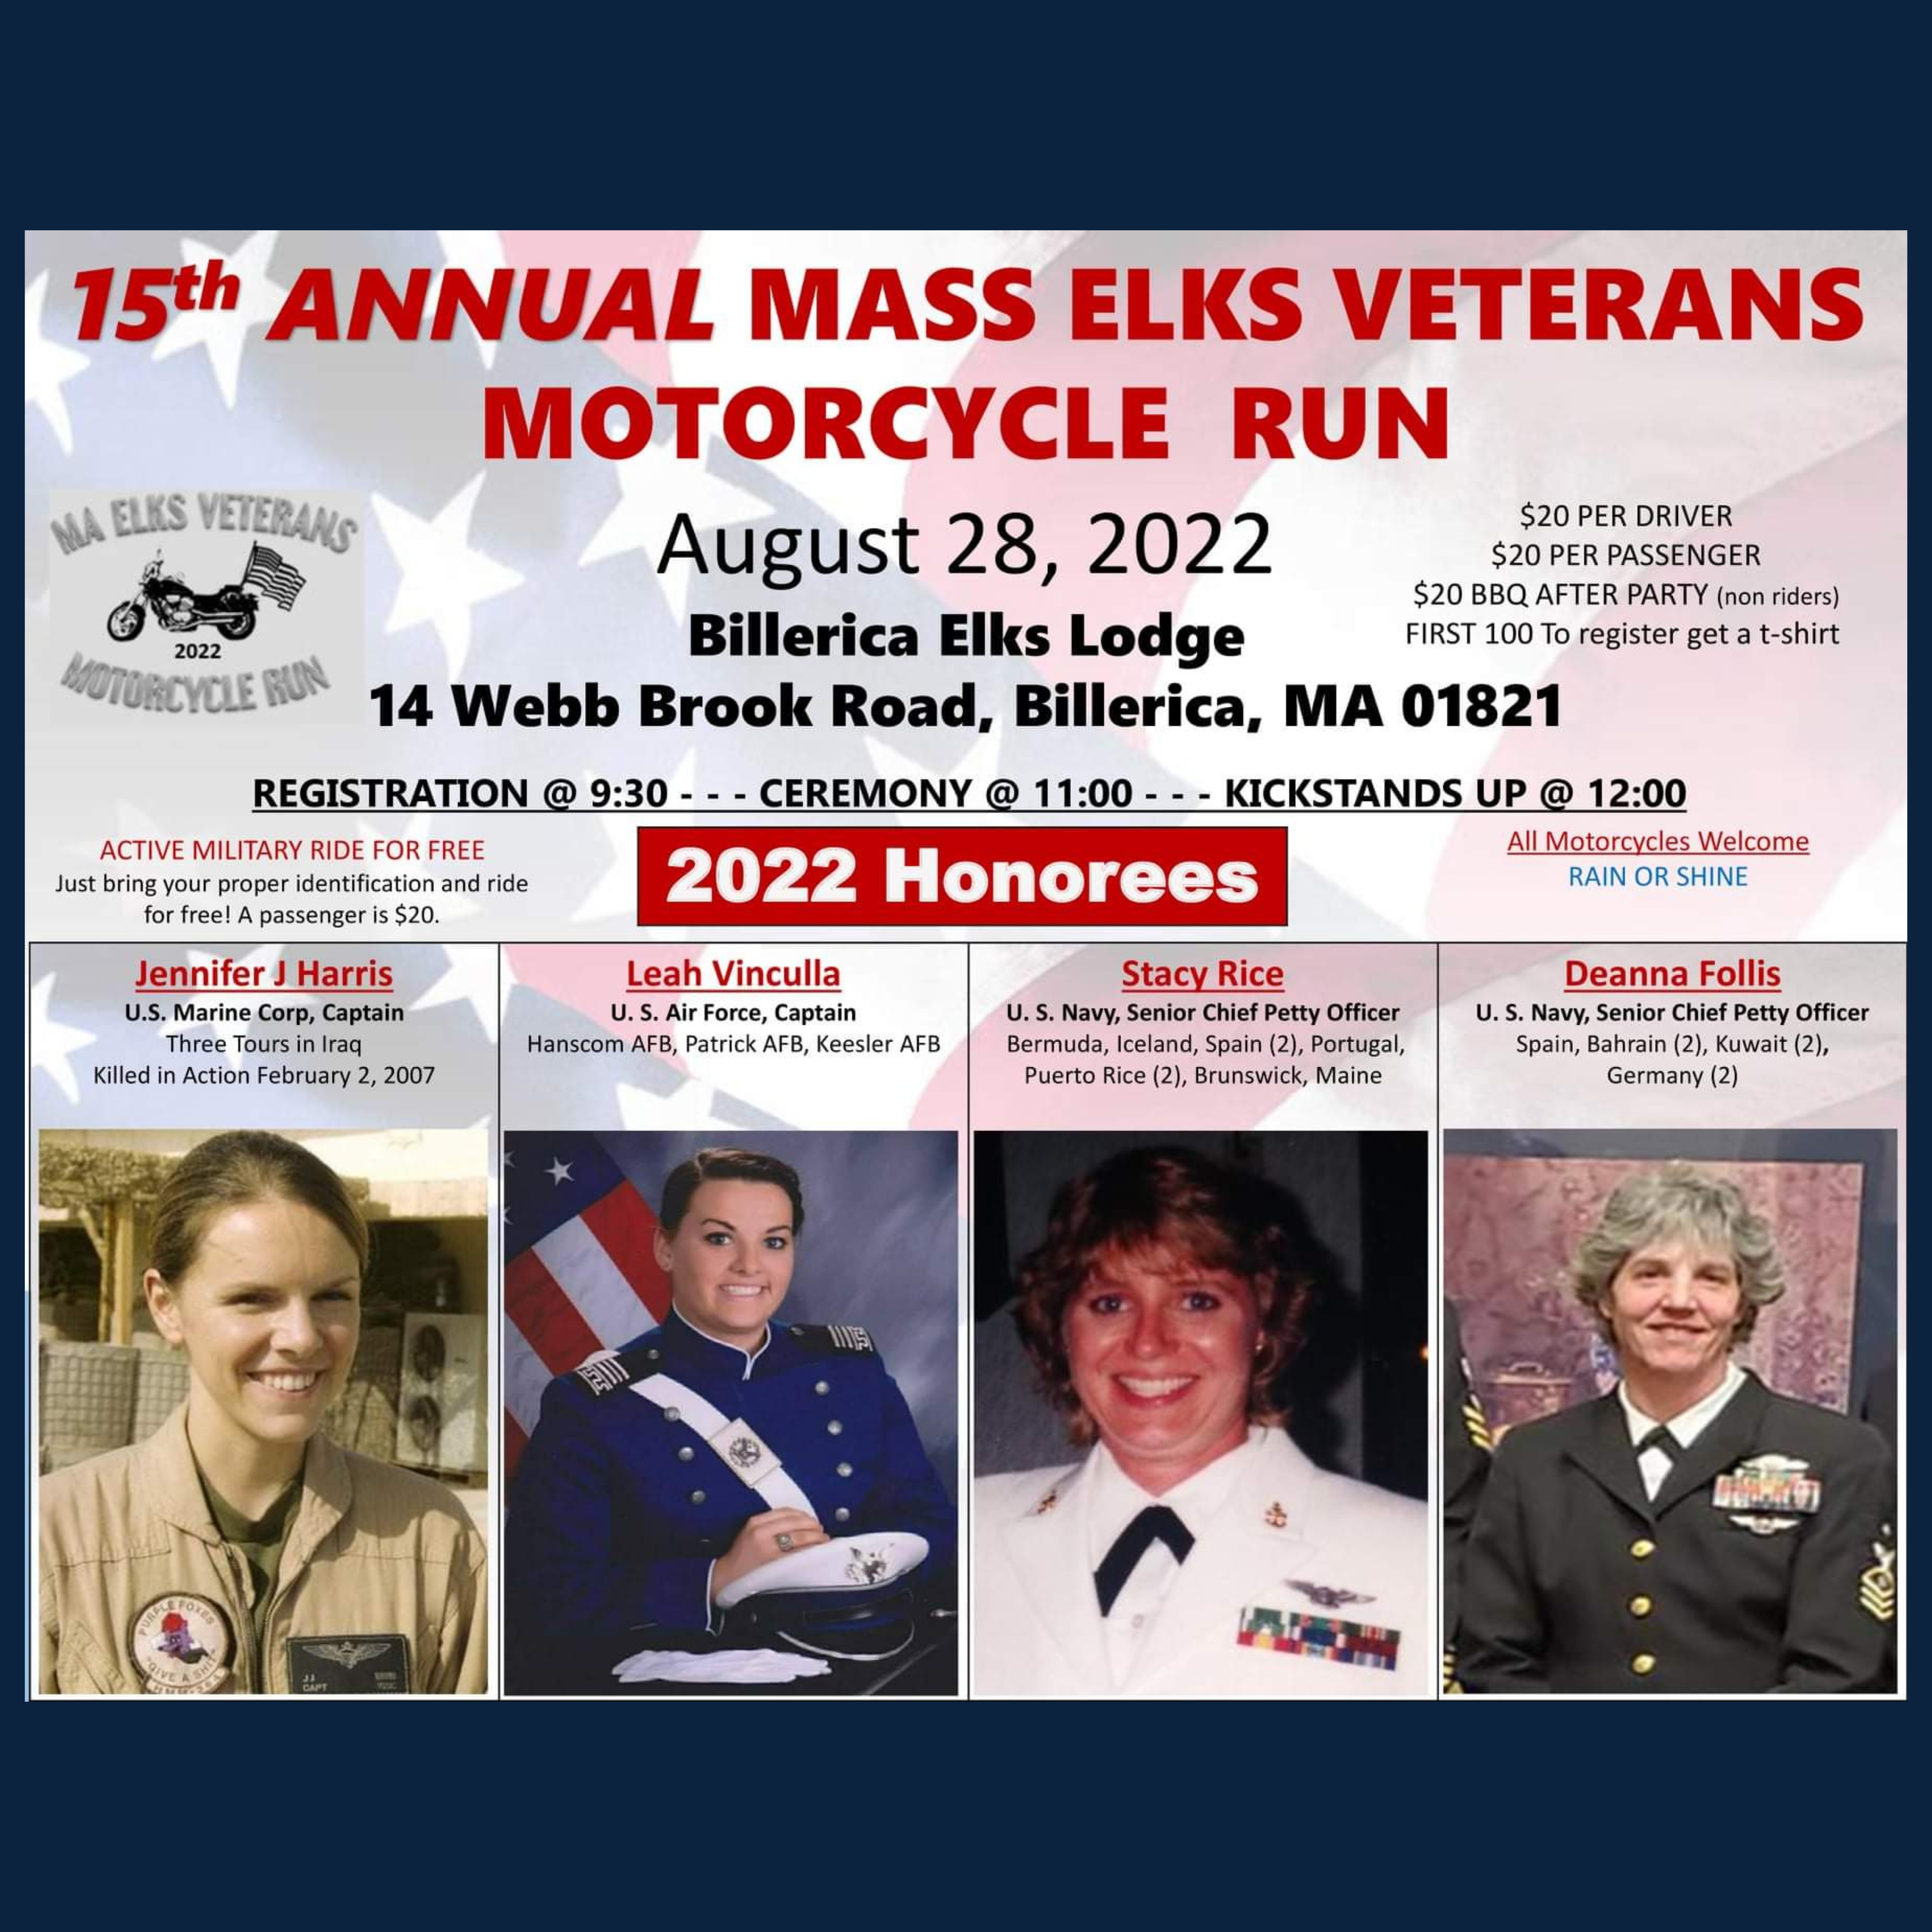 15th Annual Mass Elks Veterans Motorcycle Run